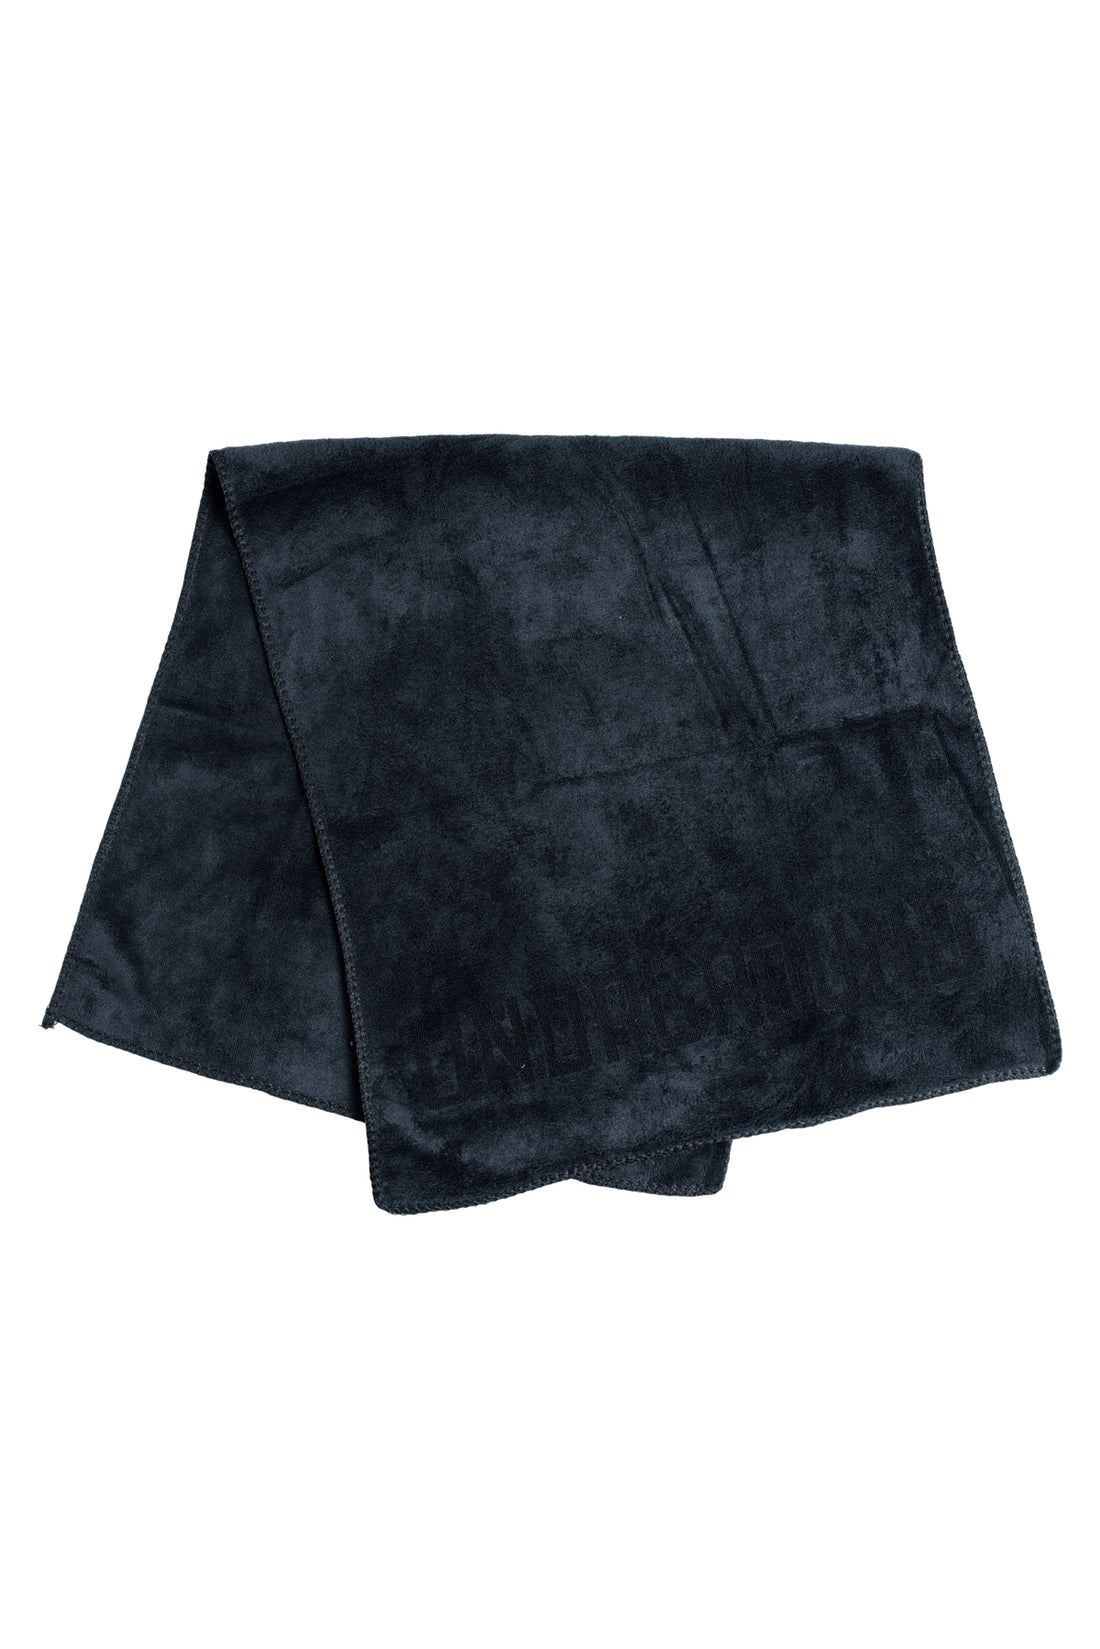 Black Microfiber Gym Towel